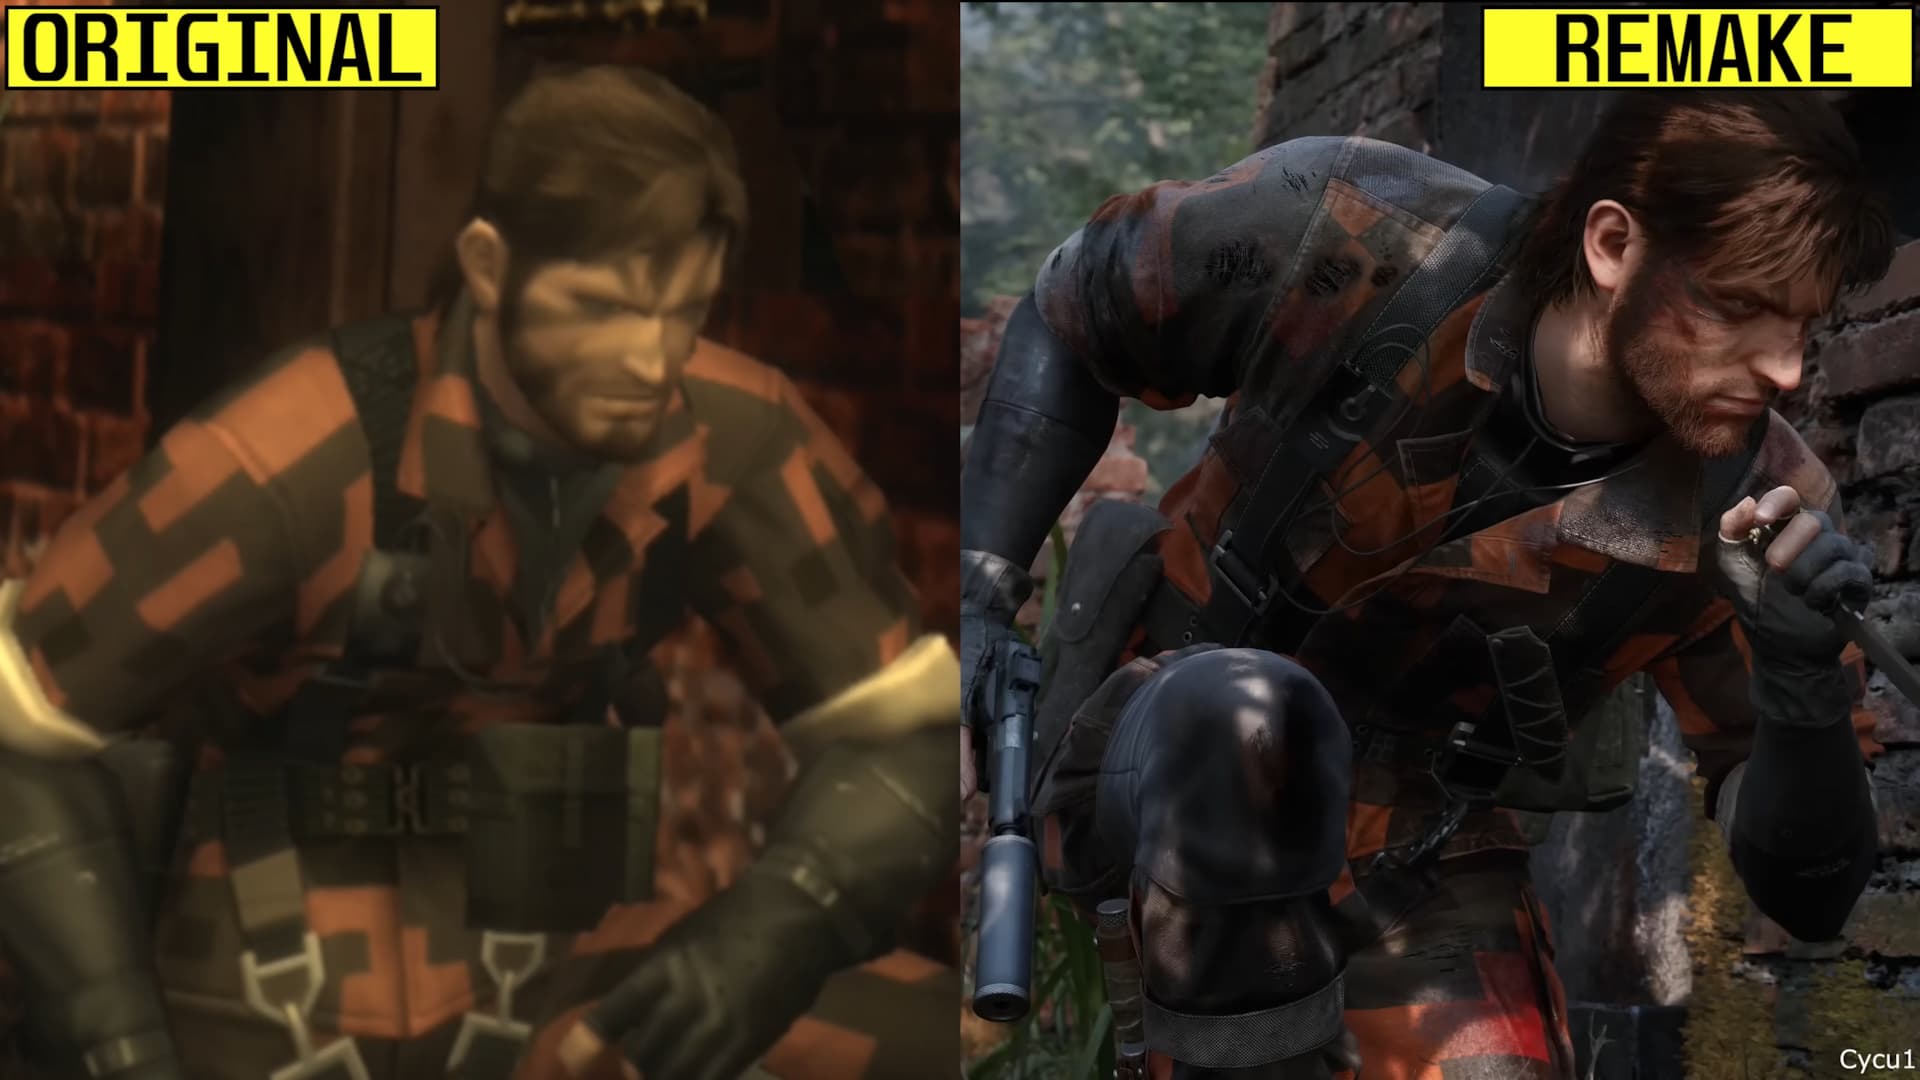 Metal Gear Solid 3 Remake vs Original Early Graphics Comparison